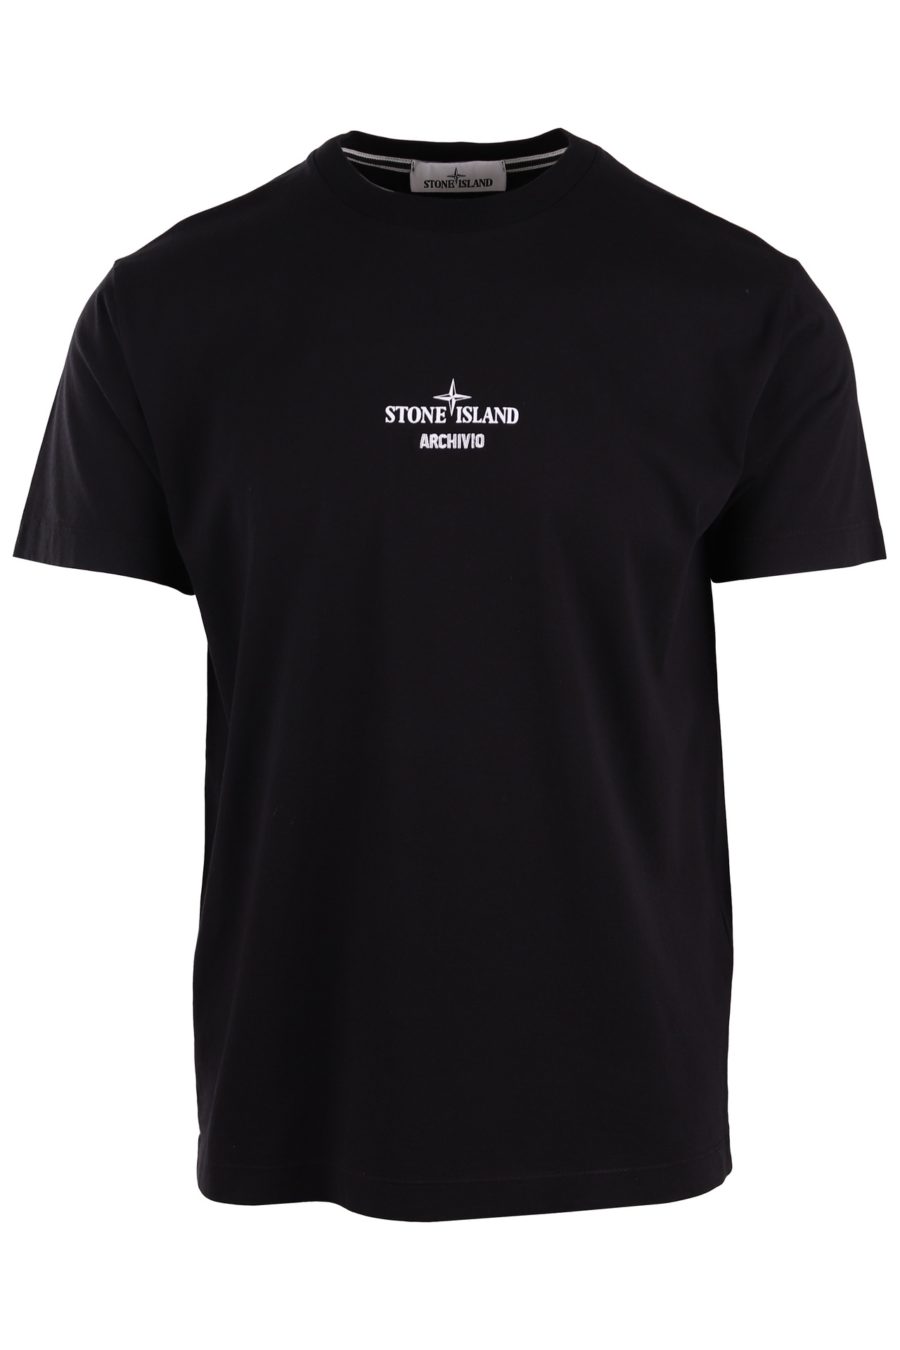 T-shirt Stone Island black with logo "archivio" - 1973d037007b1329f76e48264457effc91aeb215